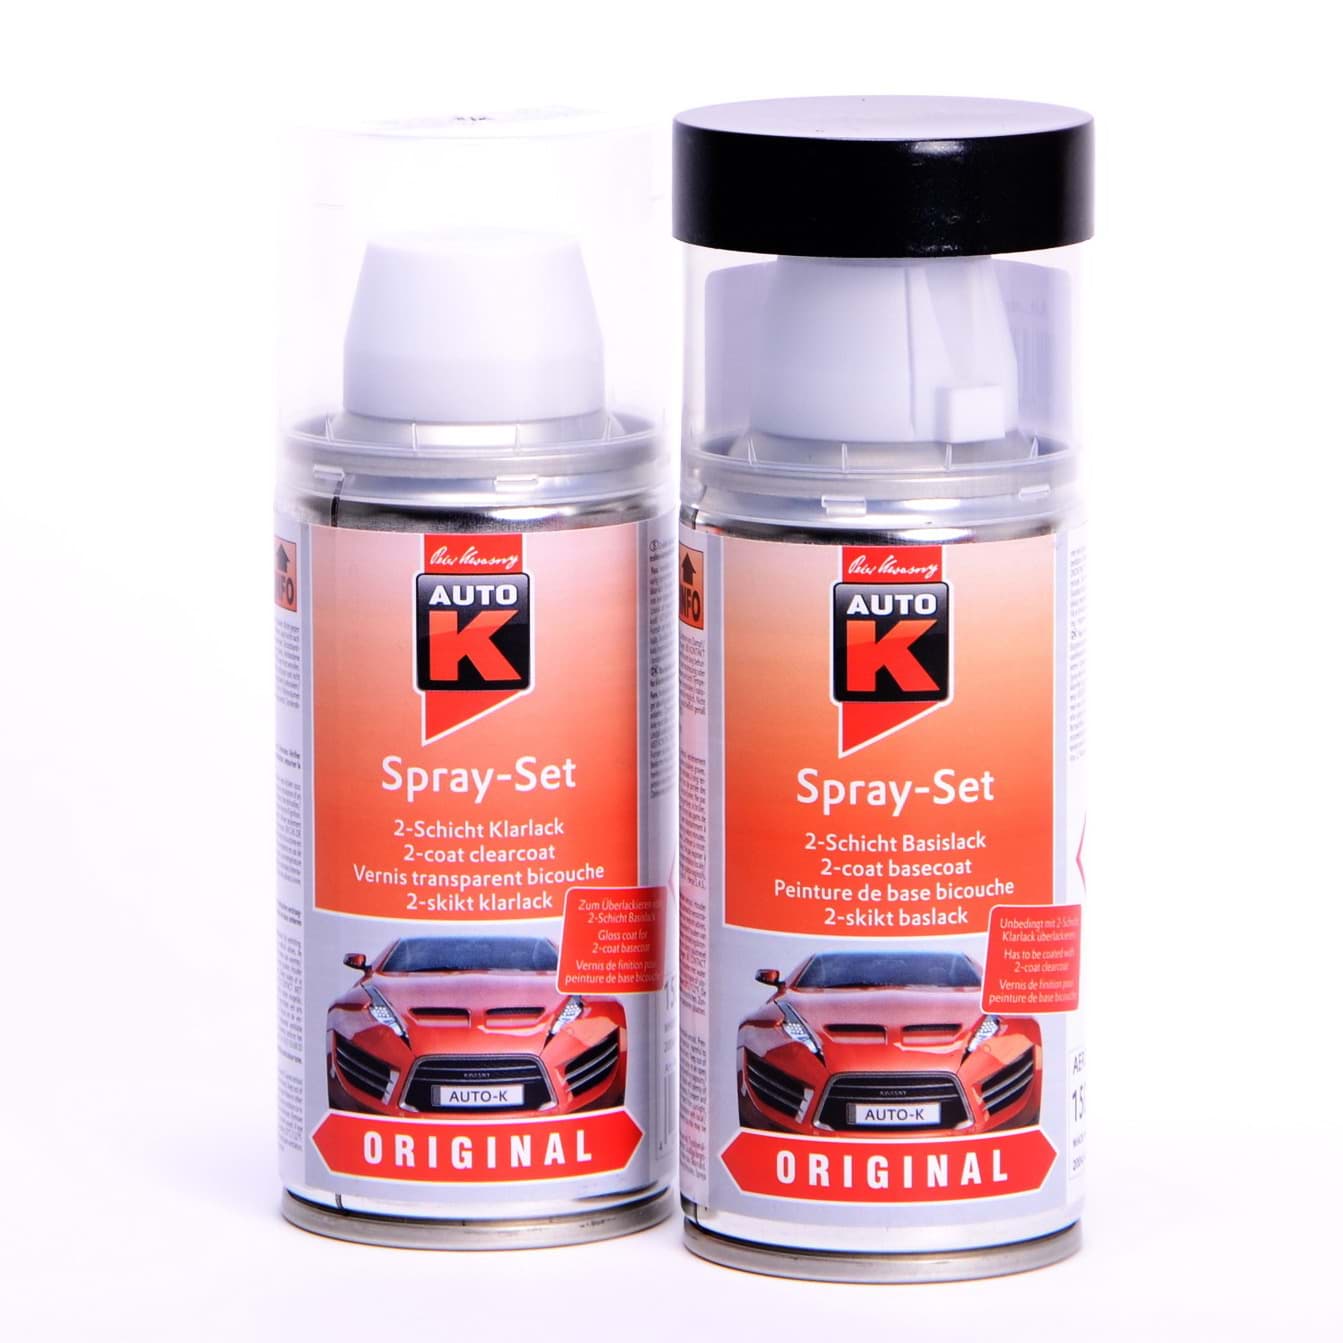 Afbeelding van Auto-K Spray-Set Autolack für Opel 369 Rio Verde met 21425